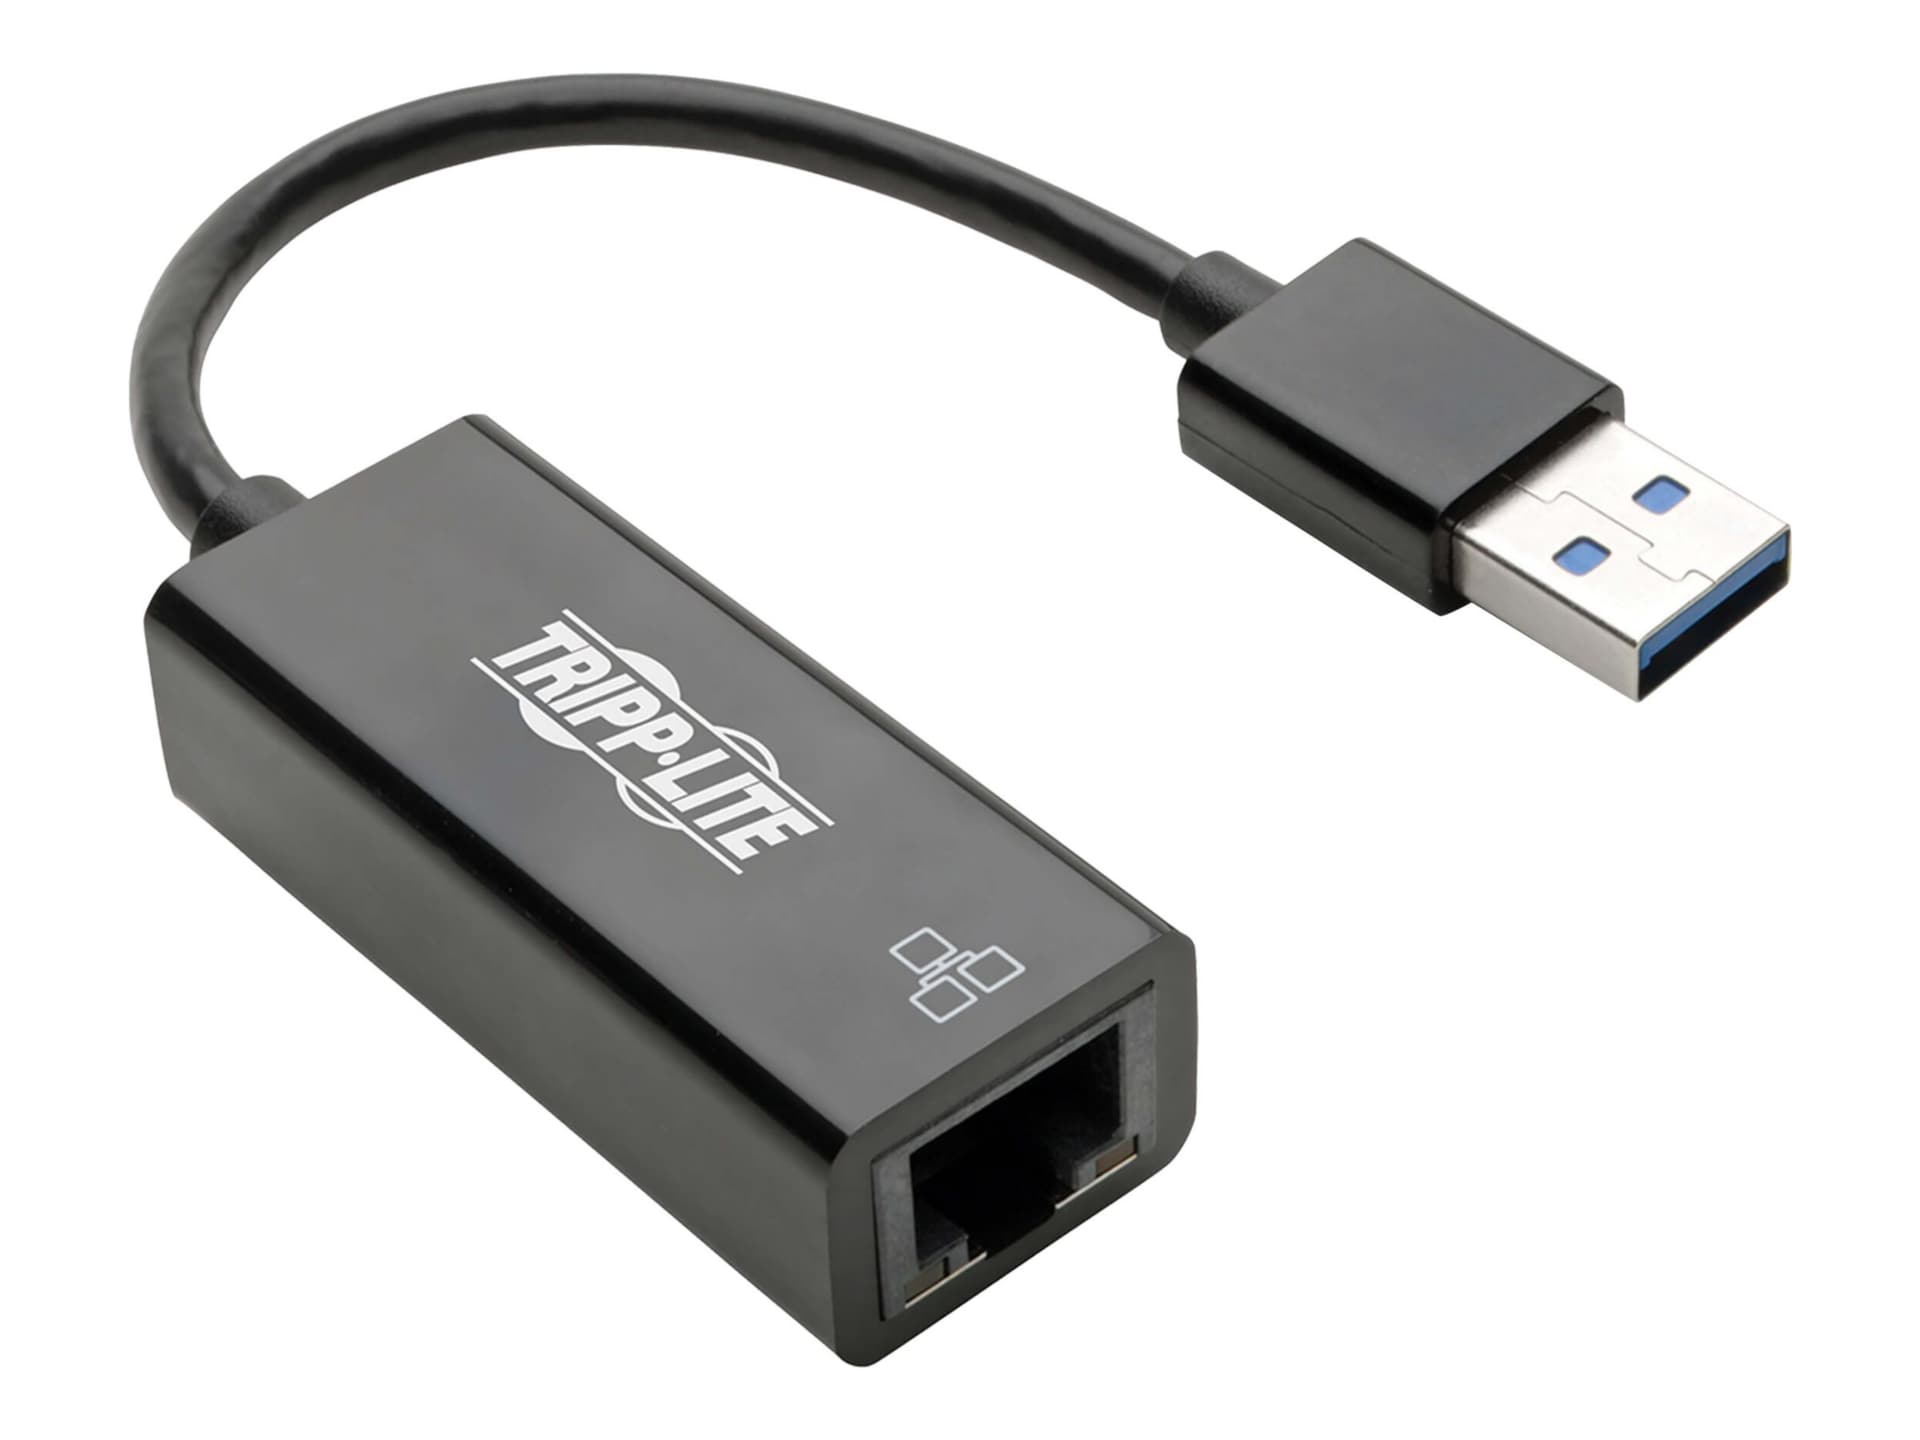 Tripp Lite USB 3.0 SuperSpeed to Gigabit Ethernet Adapter RJ45 10/100/1000 Mbps - network adapter - USB 3.0 - Gigabit